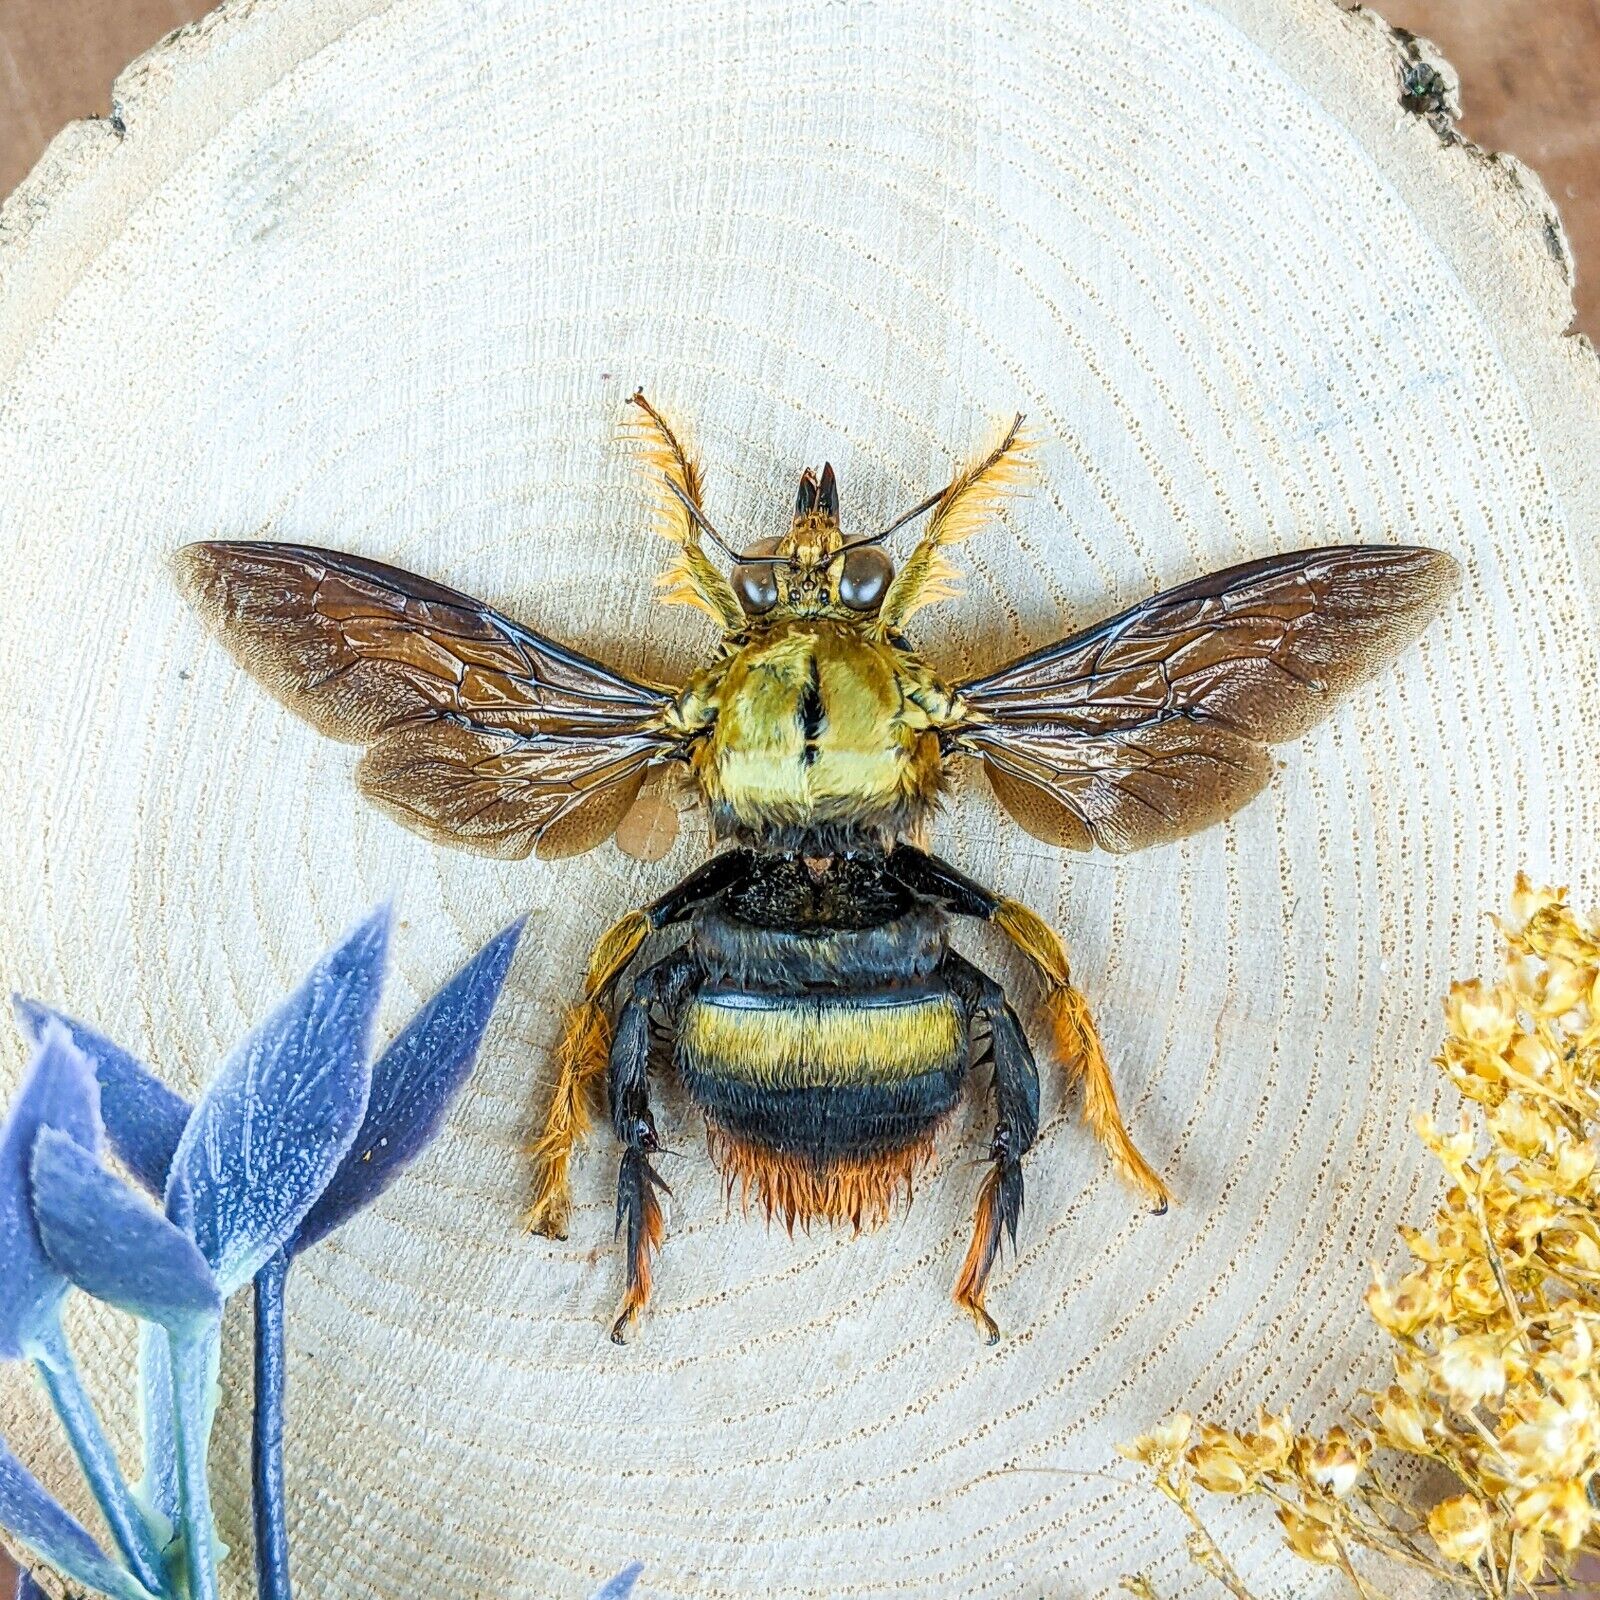 sp27 Golden brown Xylocopa Confusa Tropical Carpenter Bee specimen craft oddity